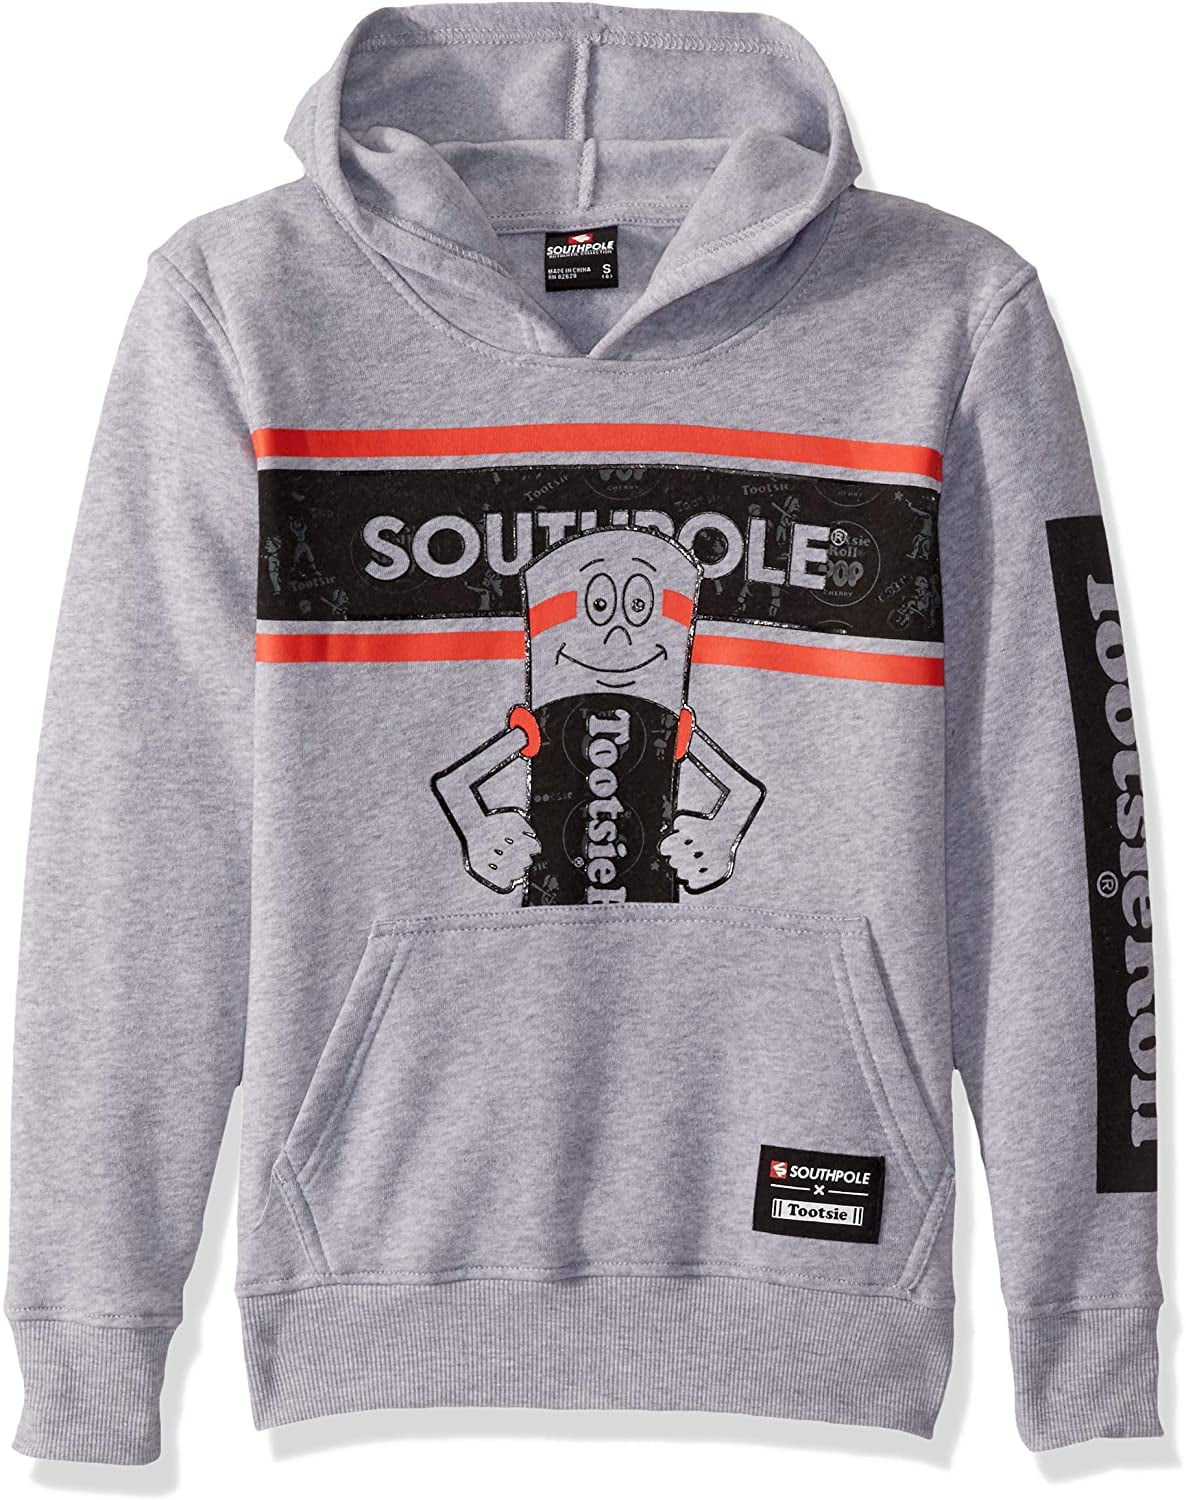 Sweatshirt Hoody,Crewneck Southpole Mens Tootsie Fashion Fleece Sweatshirt